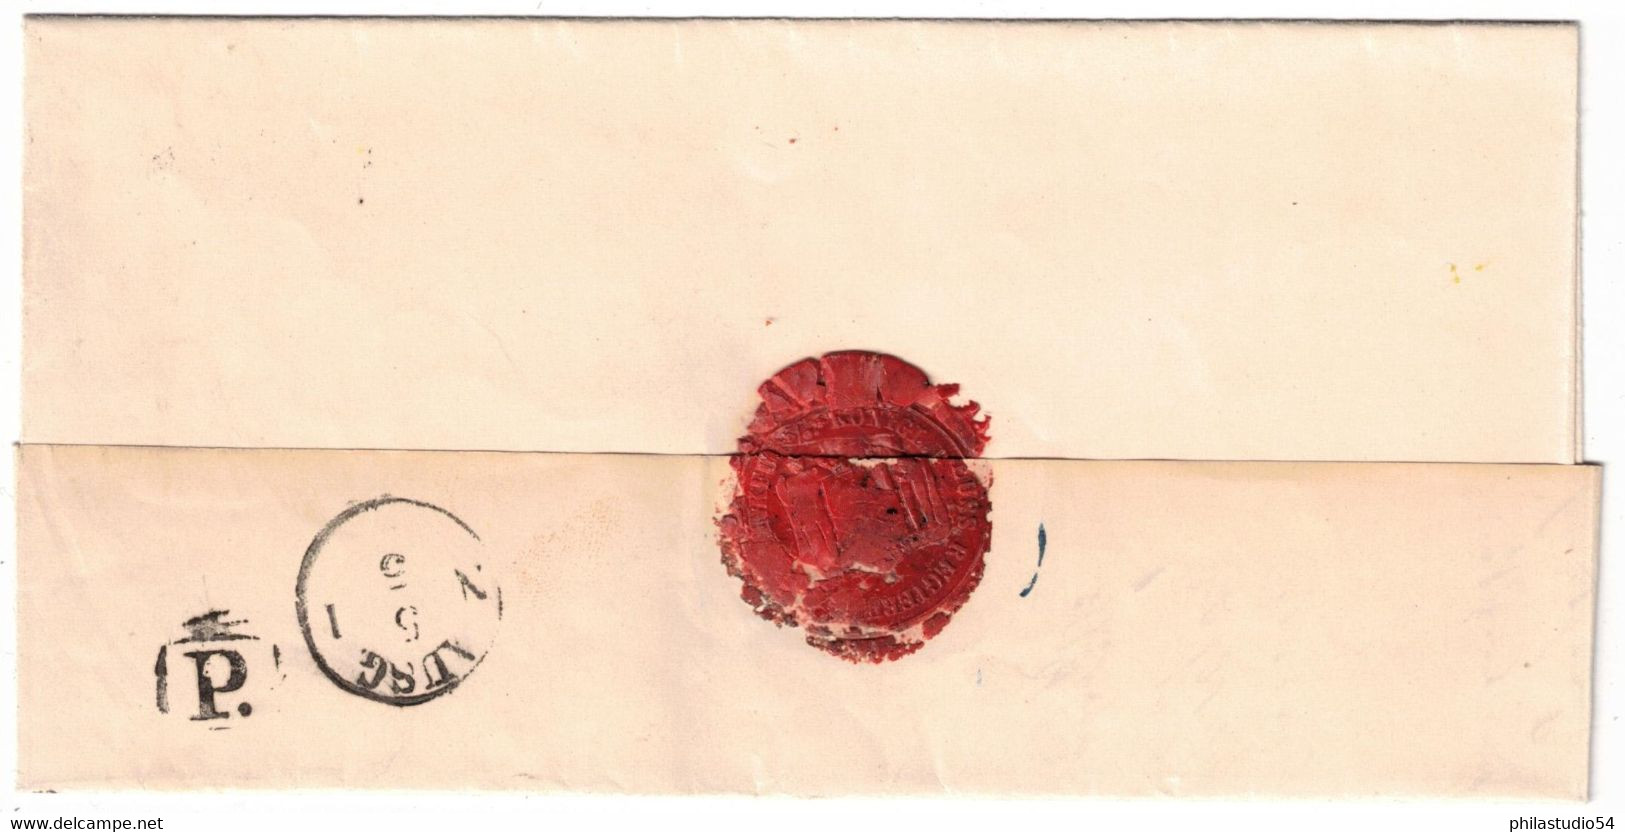 1869 Paketbegleitung Ab FRAJFURT A. O. - Storia Postale